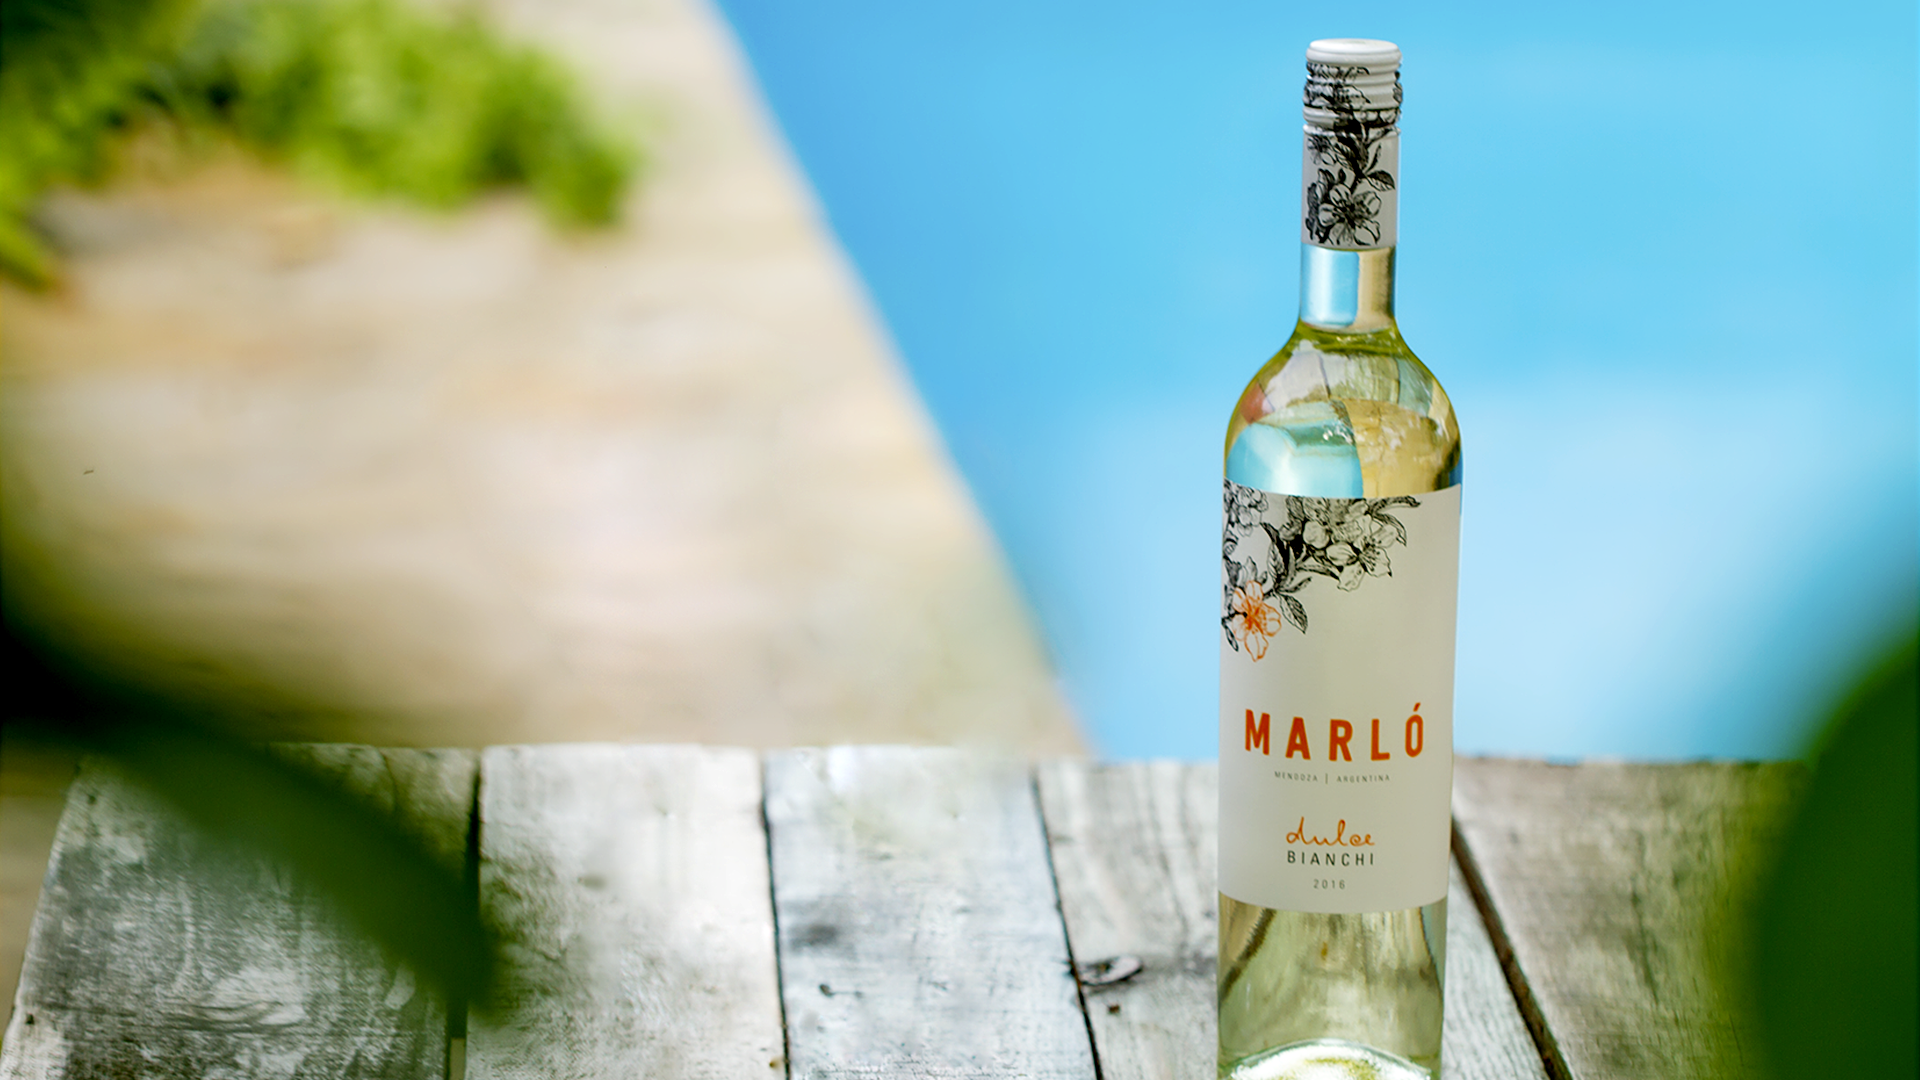 Marló sweet bottle over wooden background